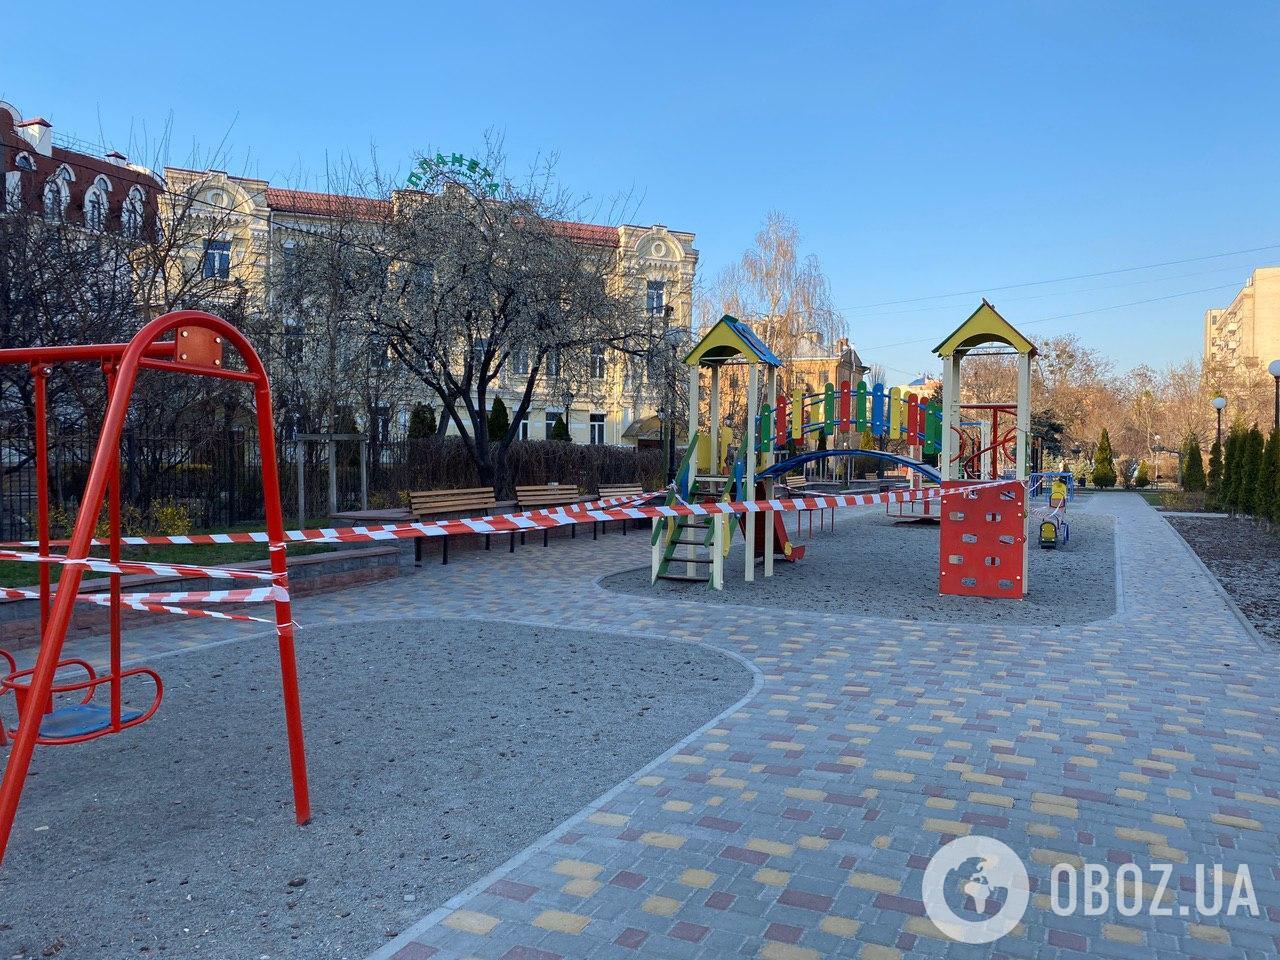 Киевляне штурмуют парки и спортплощадки